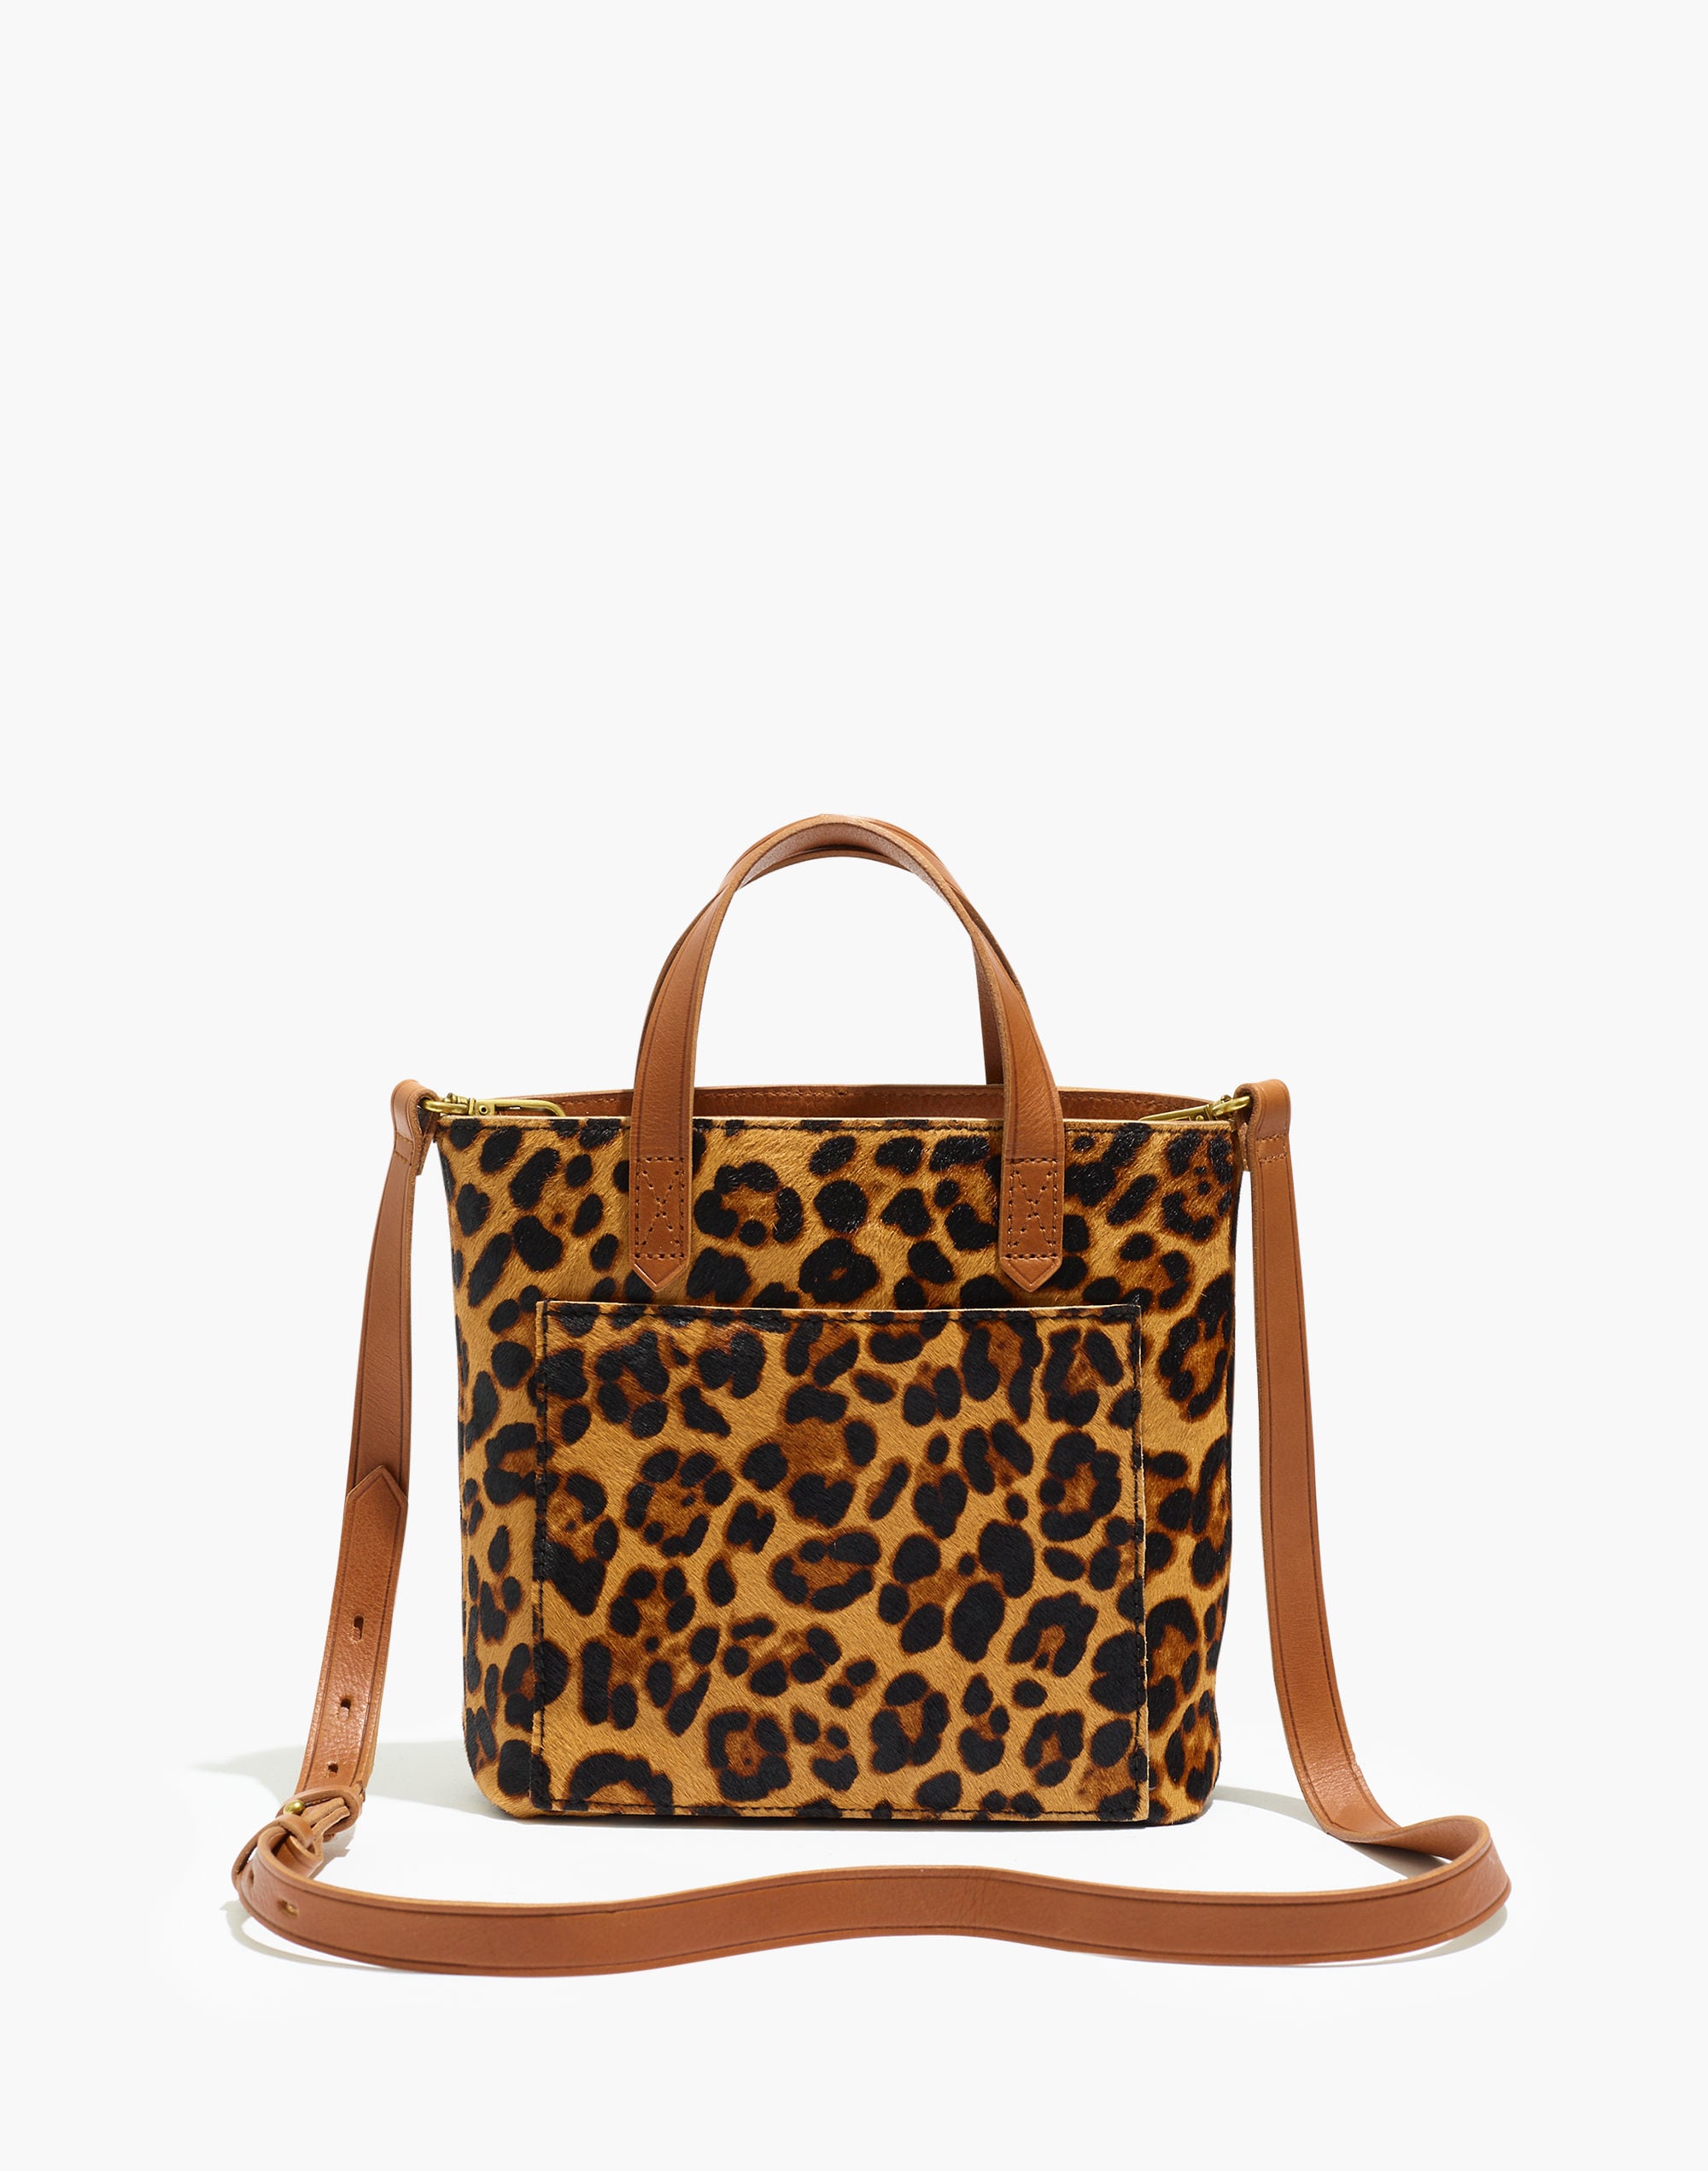 This Crossbody Handbag Is the Perfect Size • The Dapper Dahlia